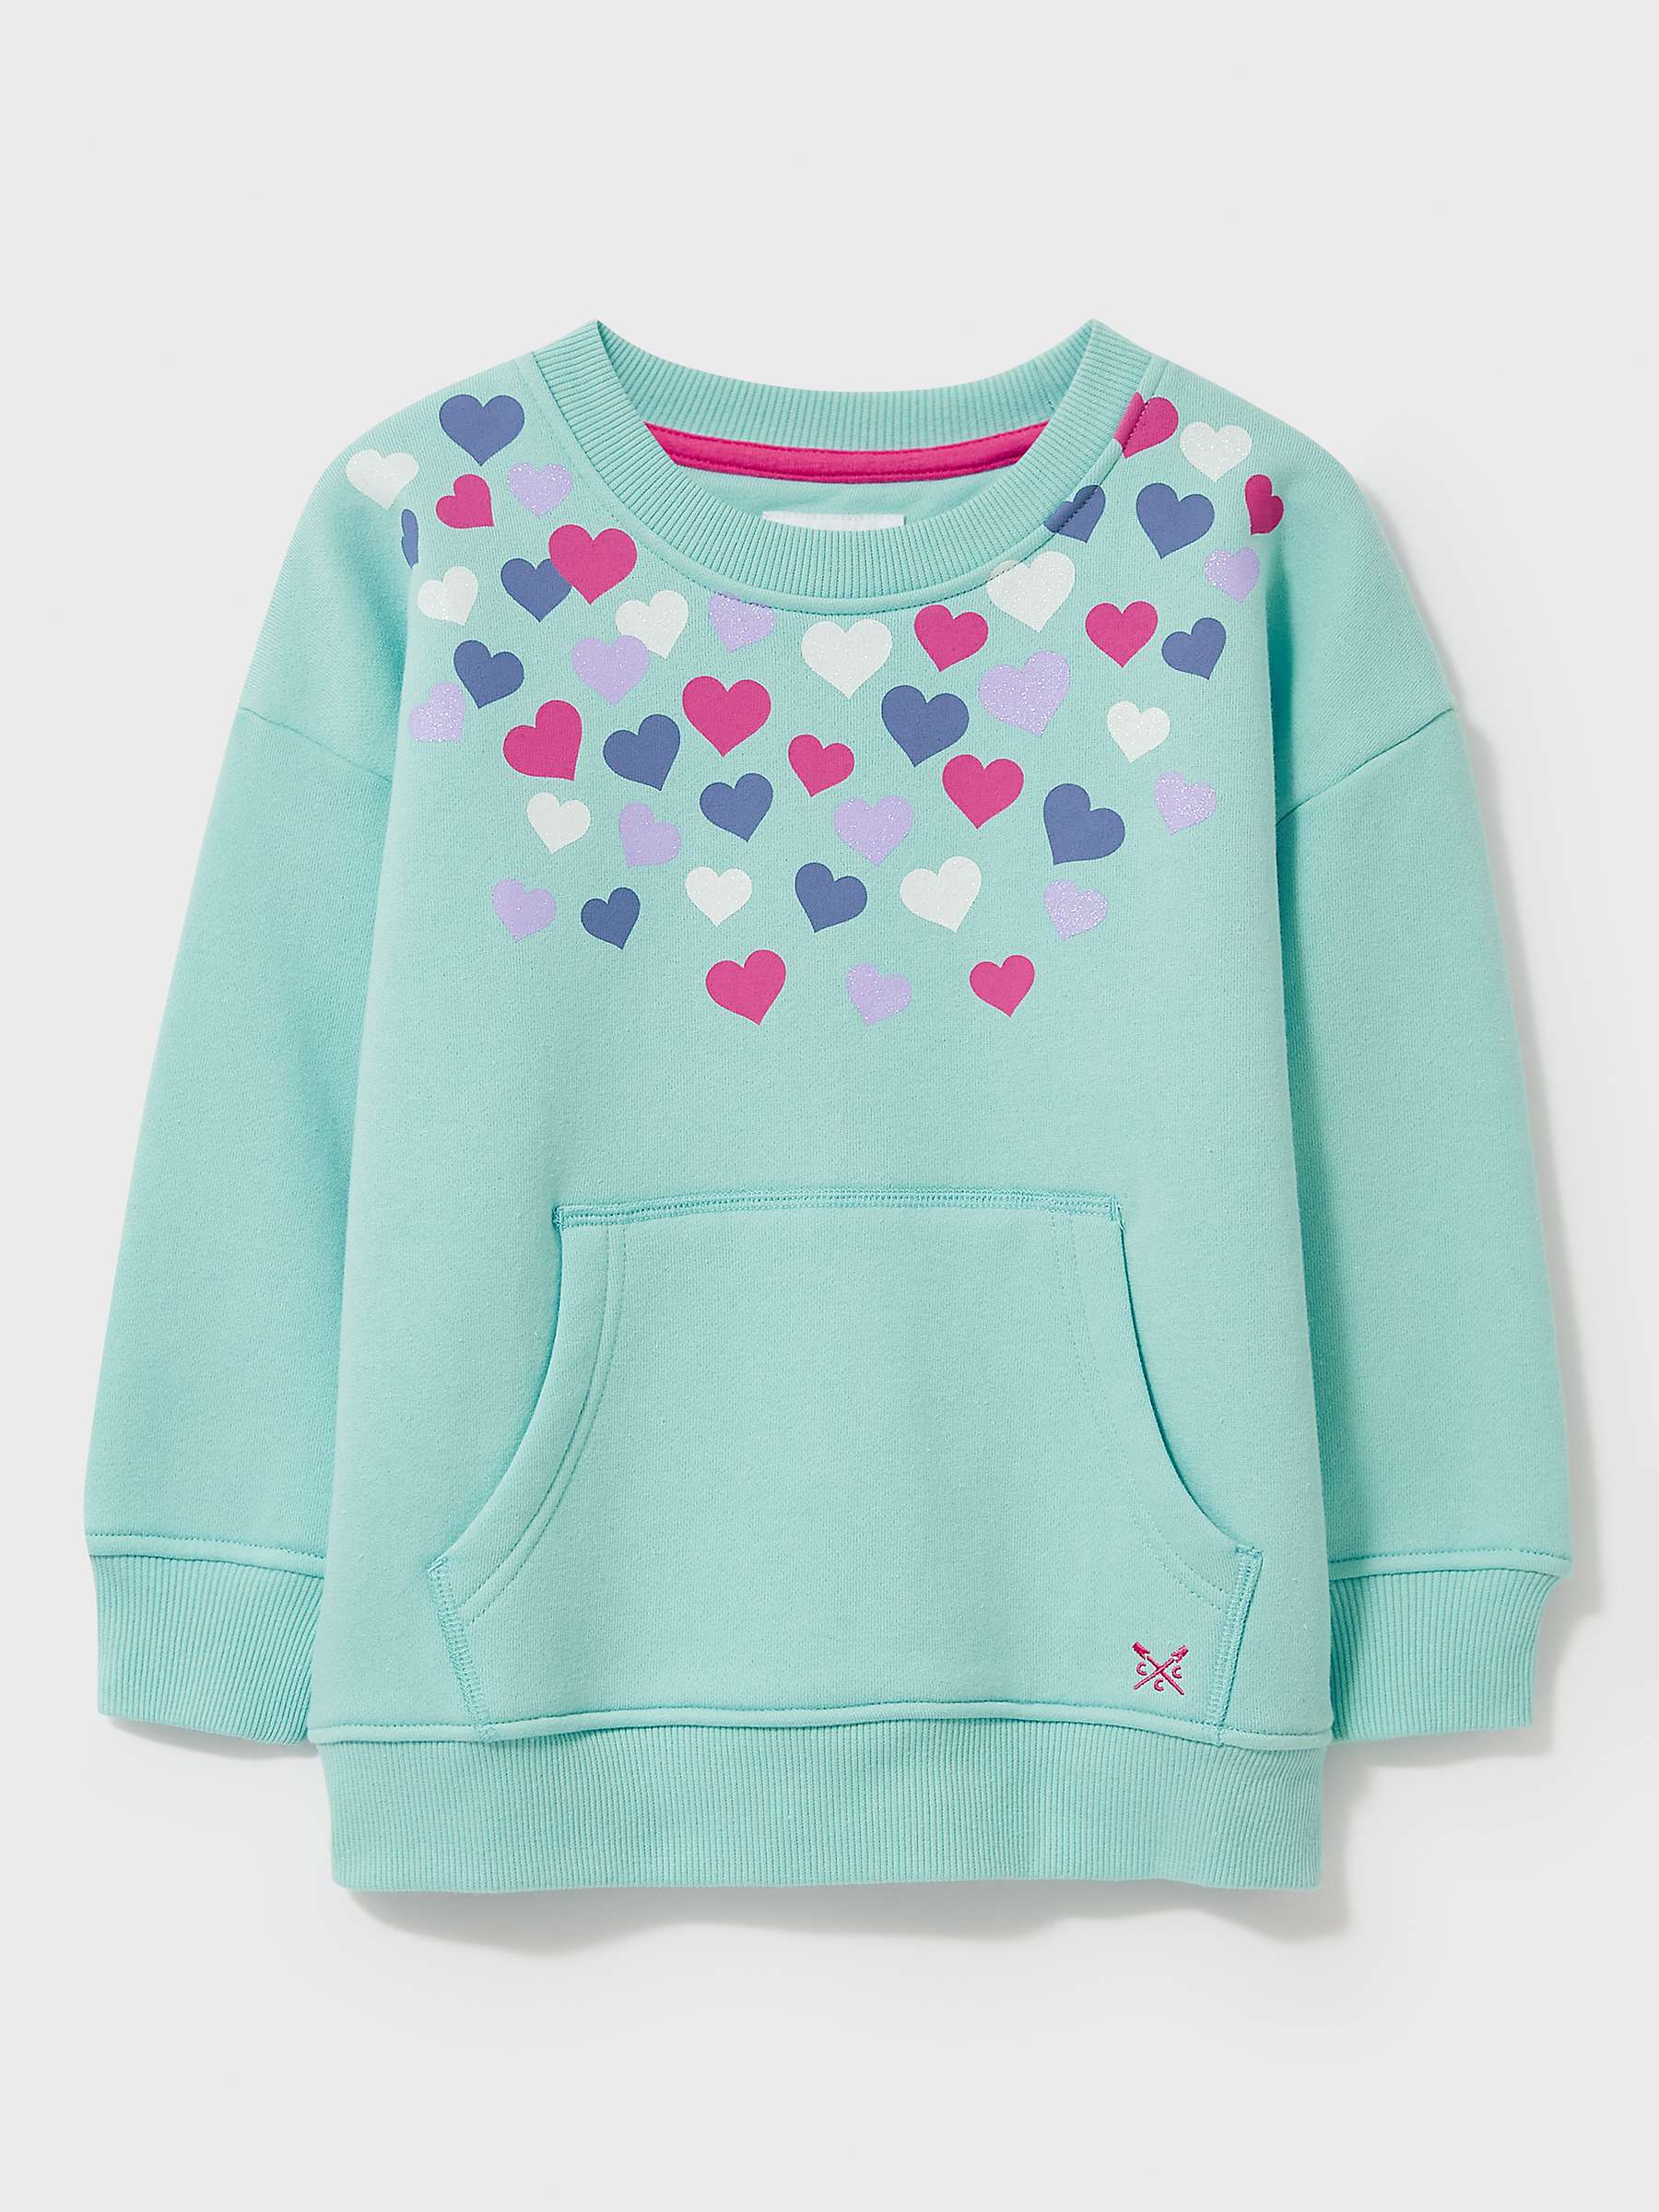 Buy Crew Clothing Kids' Glitter Print Heart Sweatshirt, Turquoise Blue Online at johnlewis.com